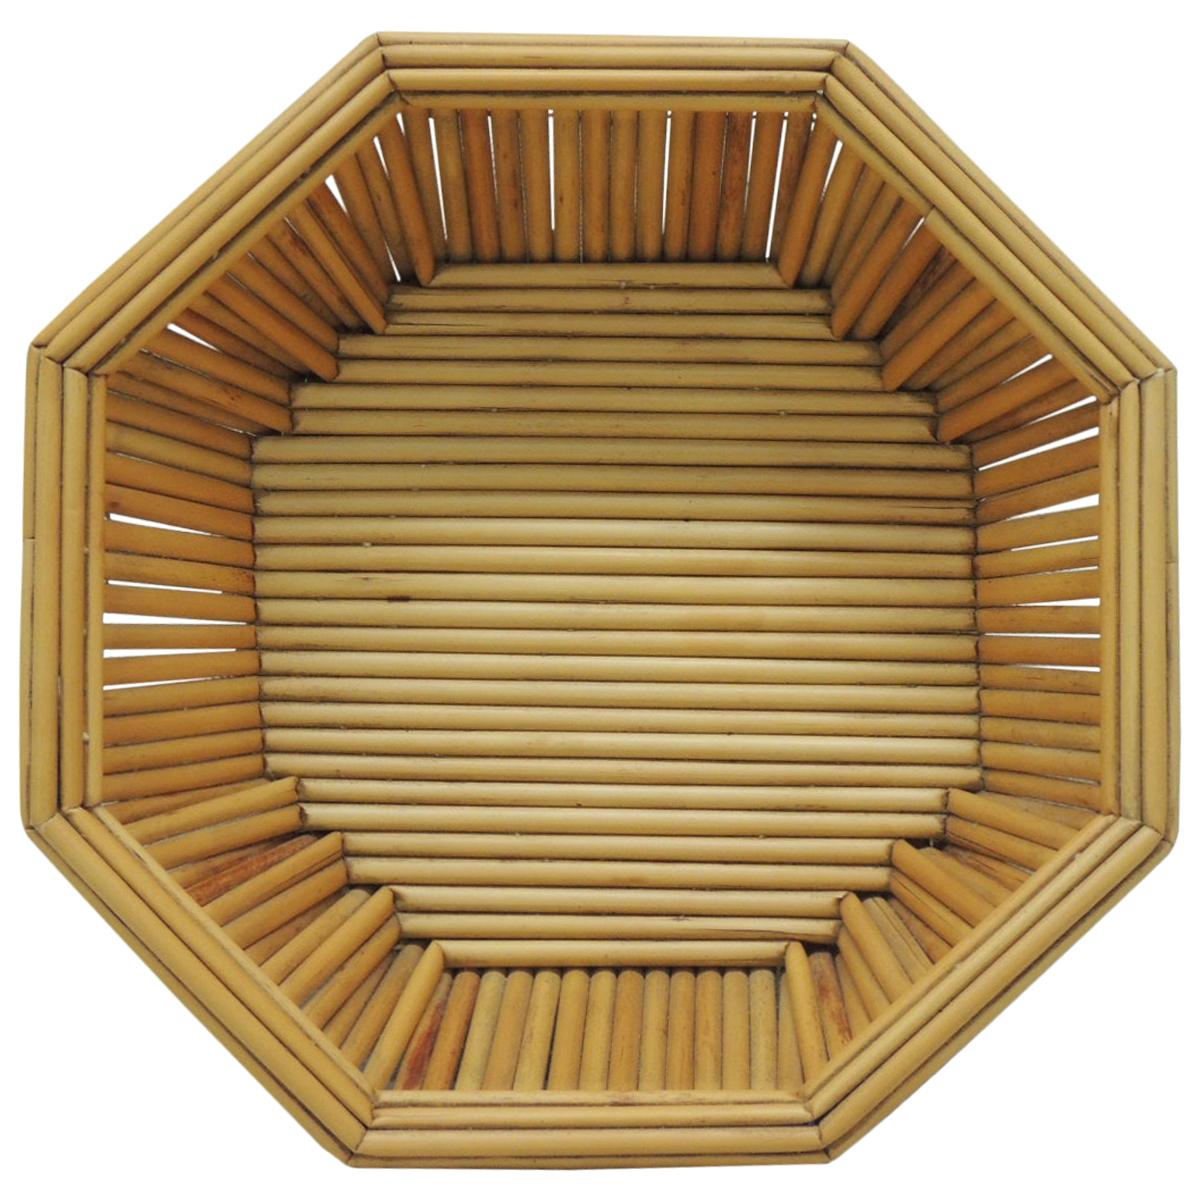 Hexagonal Vintage Bamboo Fruit Bowl or Serving Basket